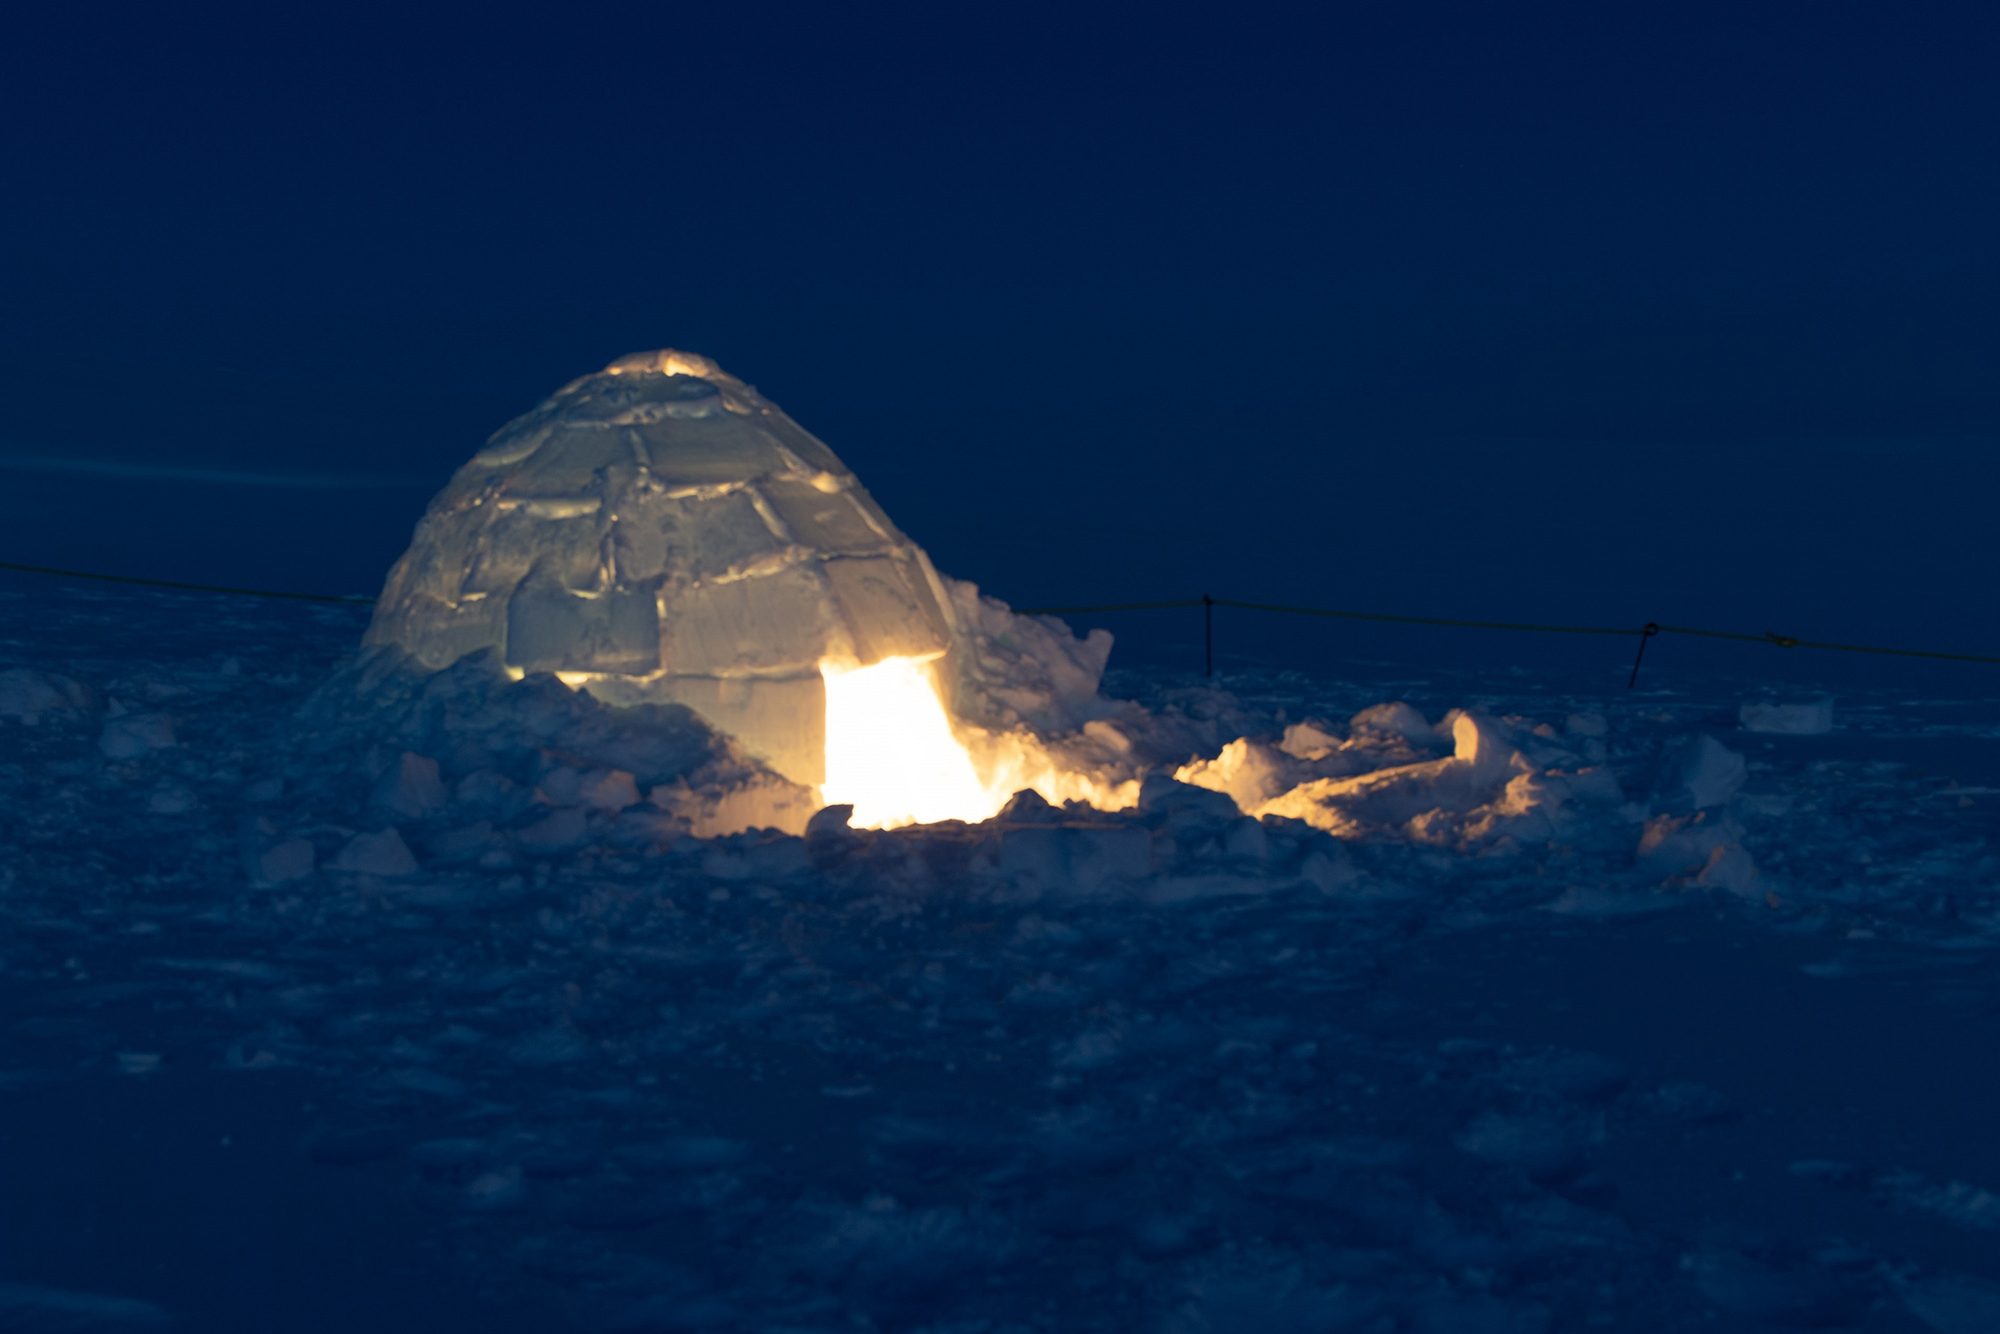 A photo of an illuminated igloo at night.